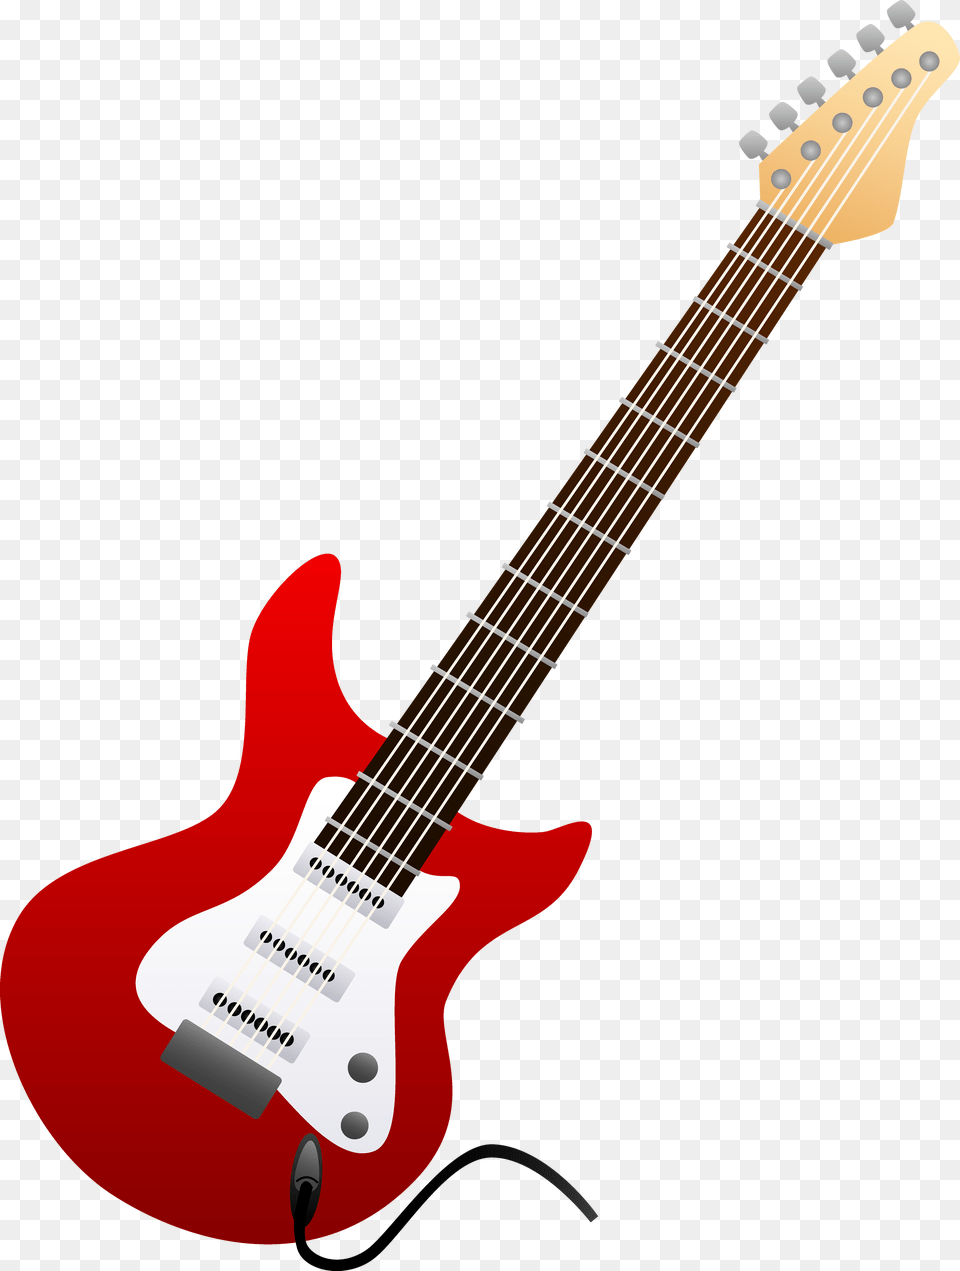 Electric Guitar Clipart, Electric Guitar, Musical Instrument, Bass Guitar Free Transparent Png